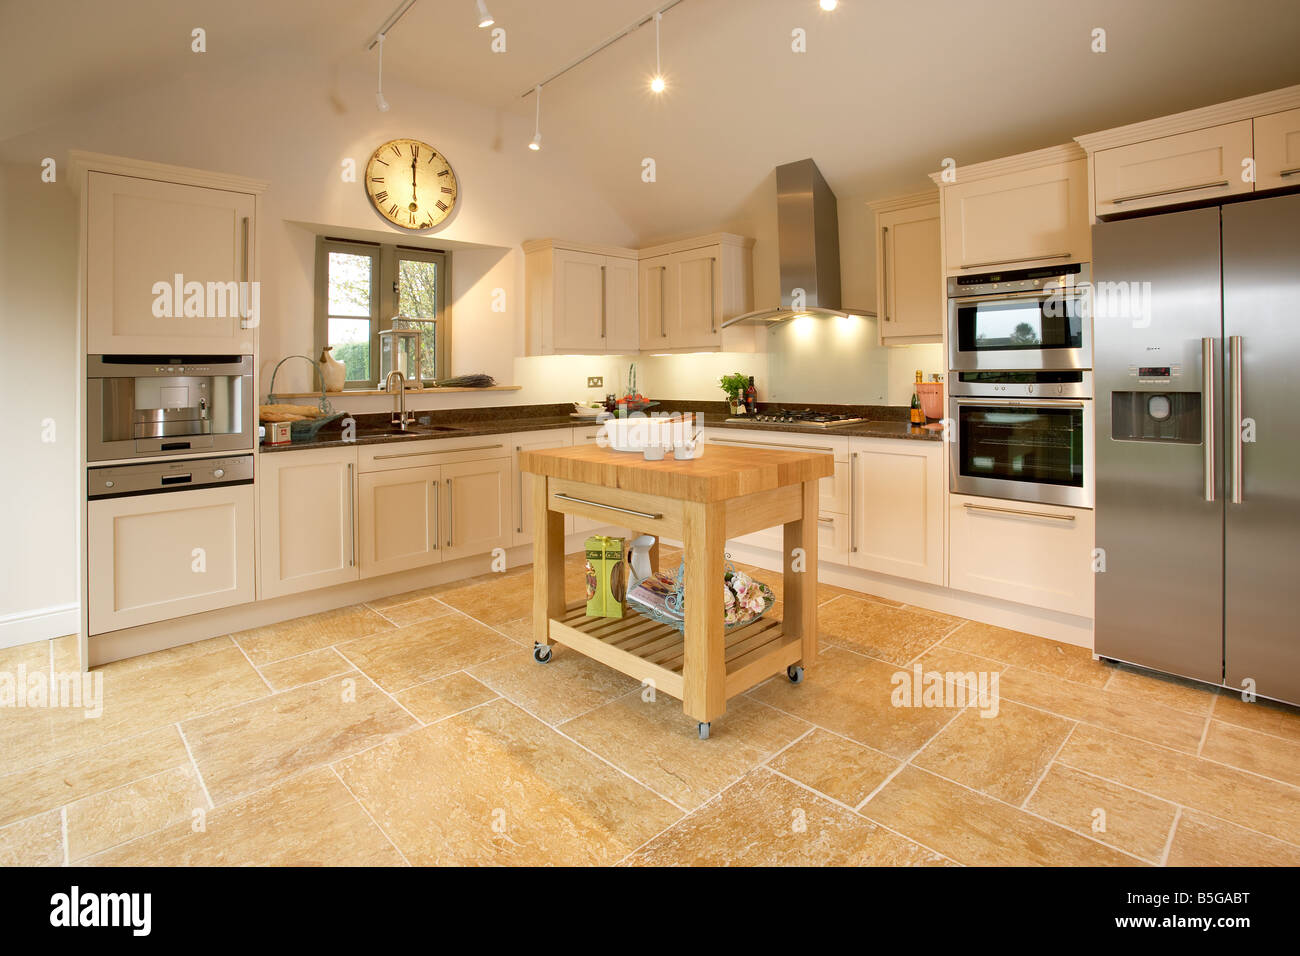 https://c8.alamy.com/comp/B5GABT/modern-shaker-style-kitchen-with-limestone-floor-butchers-block-and-B5GABT.jpg